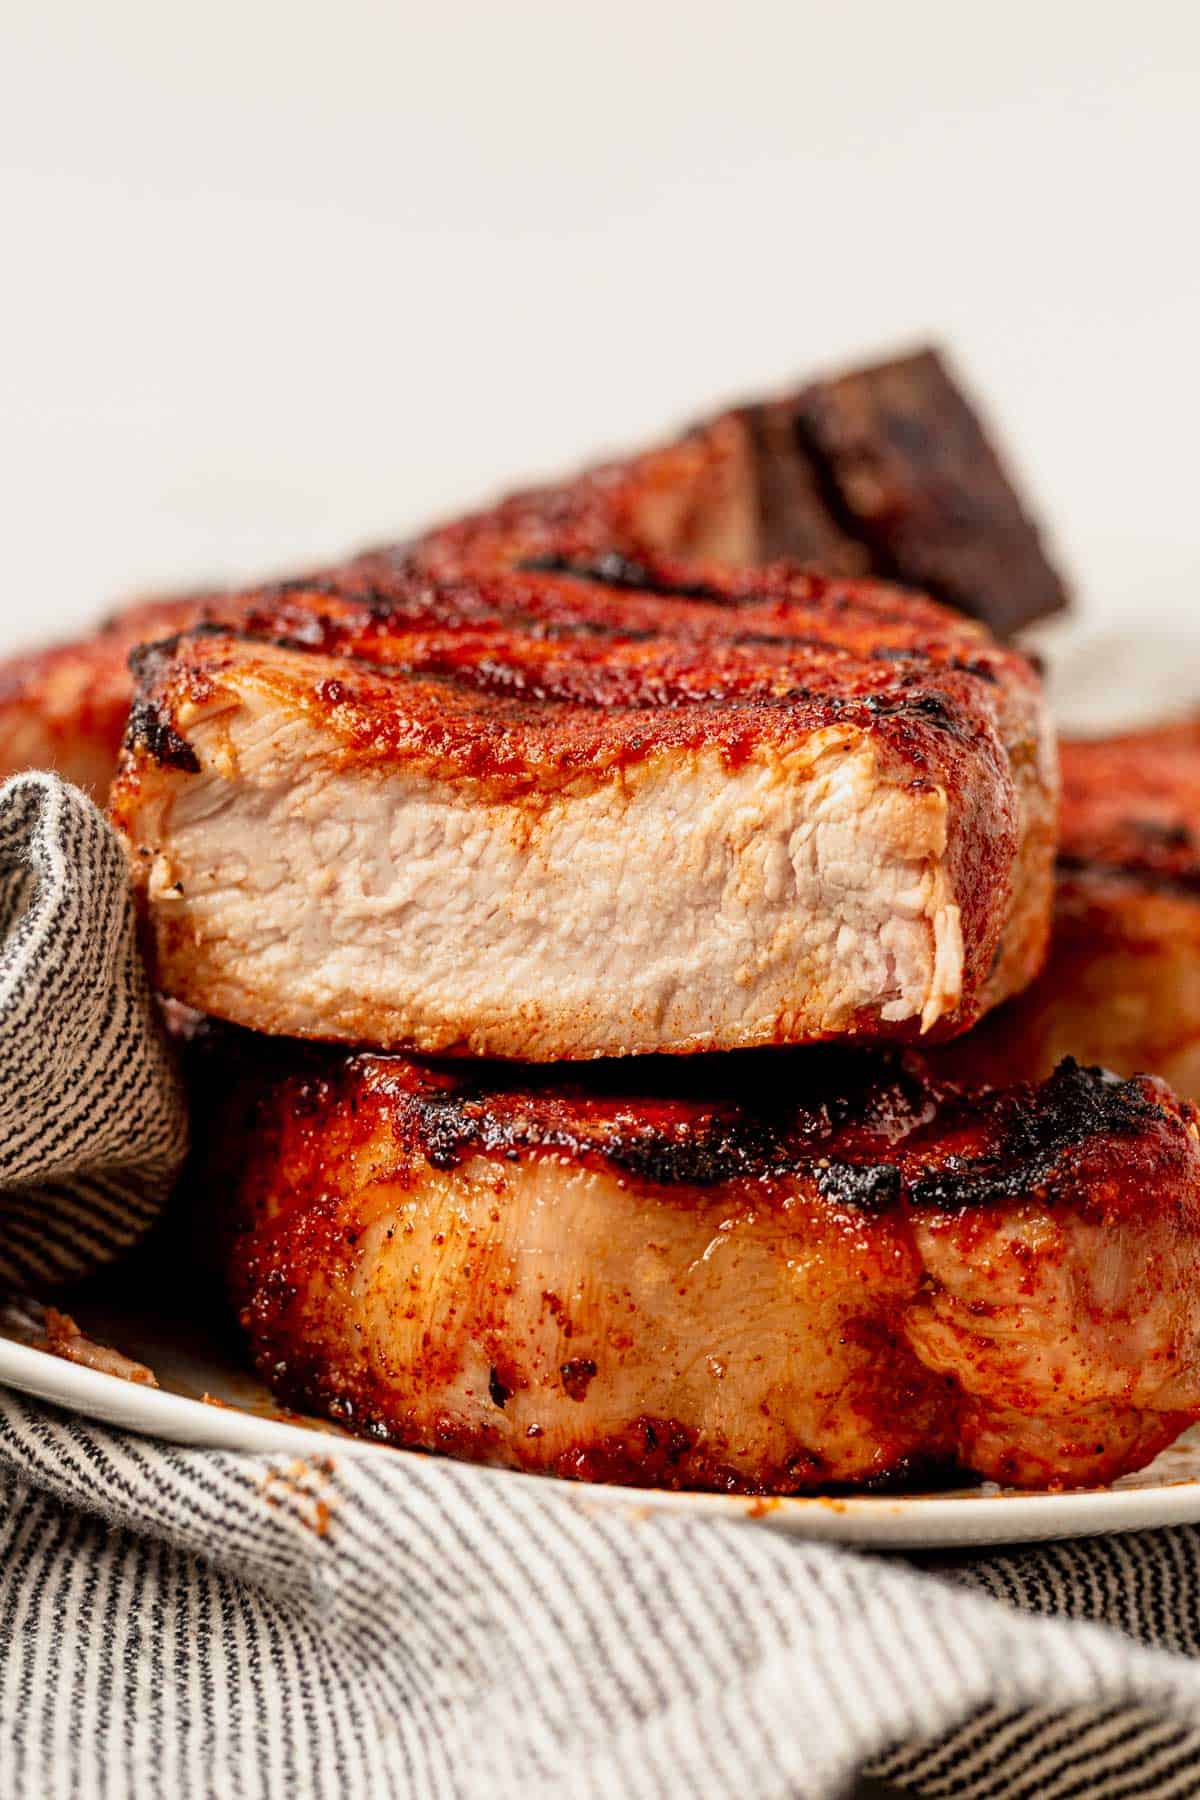 a juicy grilled pork chop cut in half